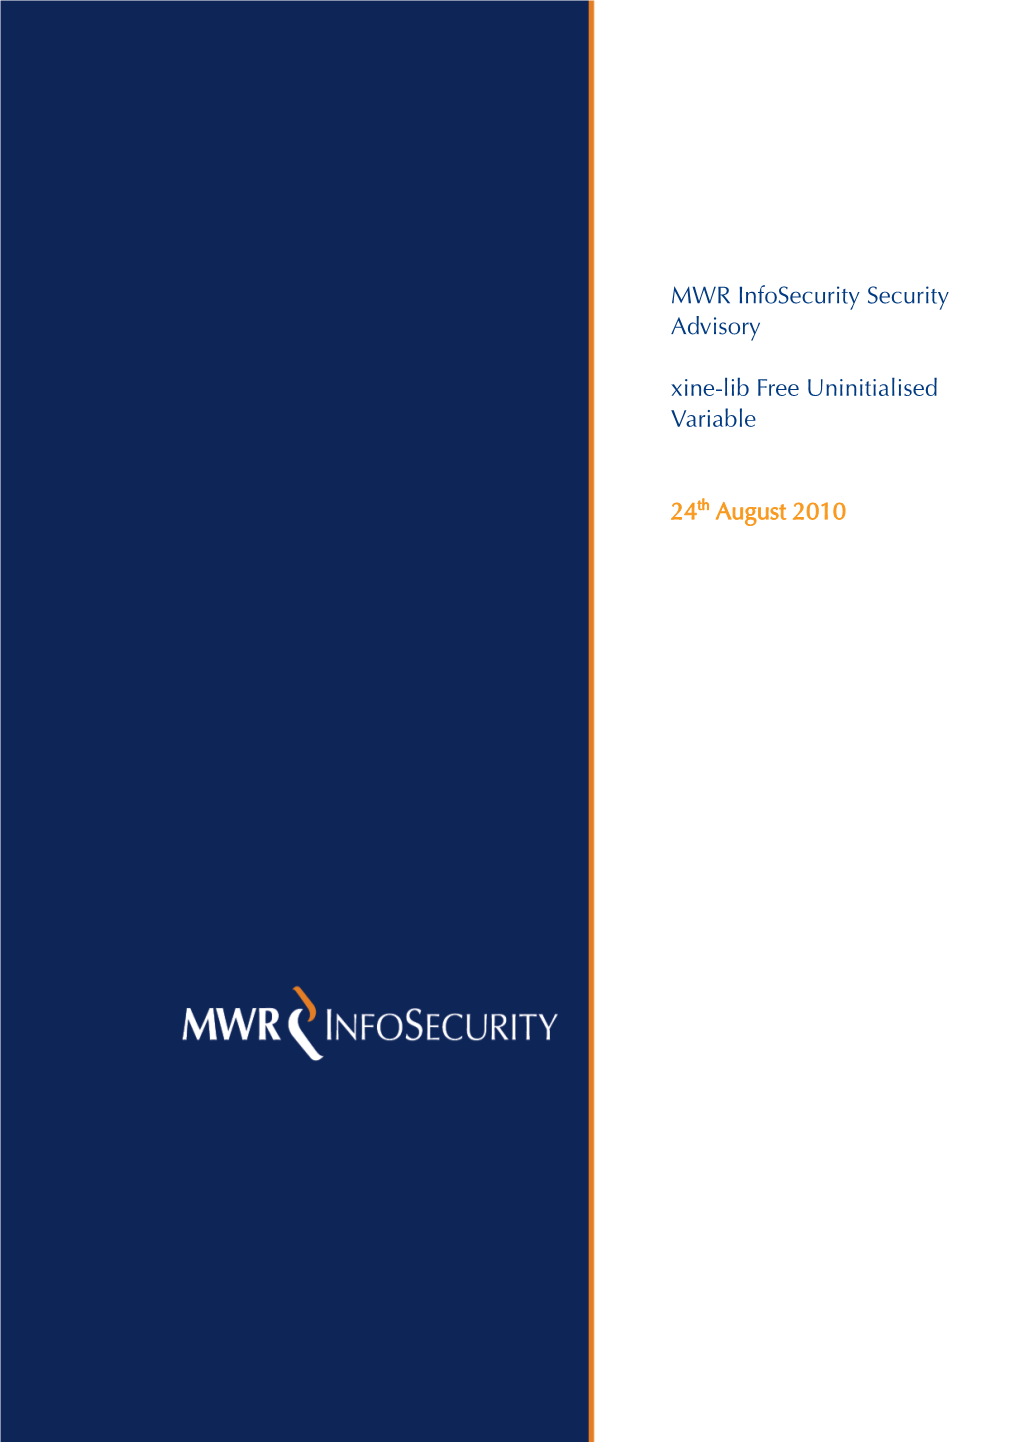 MWR Infosecurity Security Advisory Xine-Lib Free Uninitialised Variable